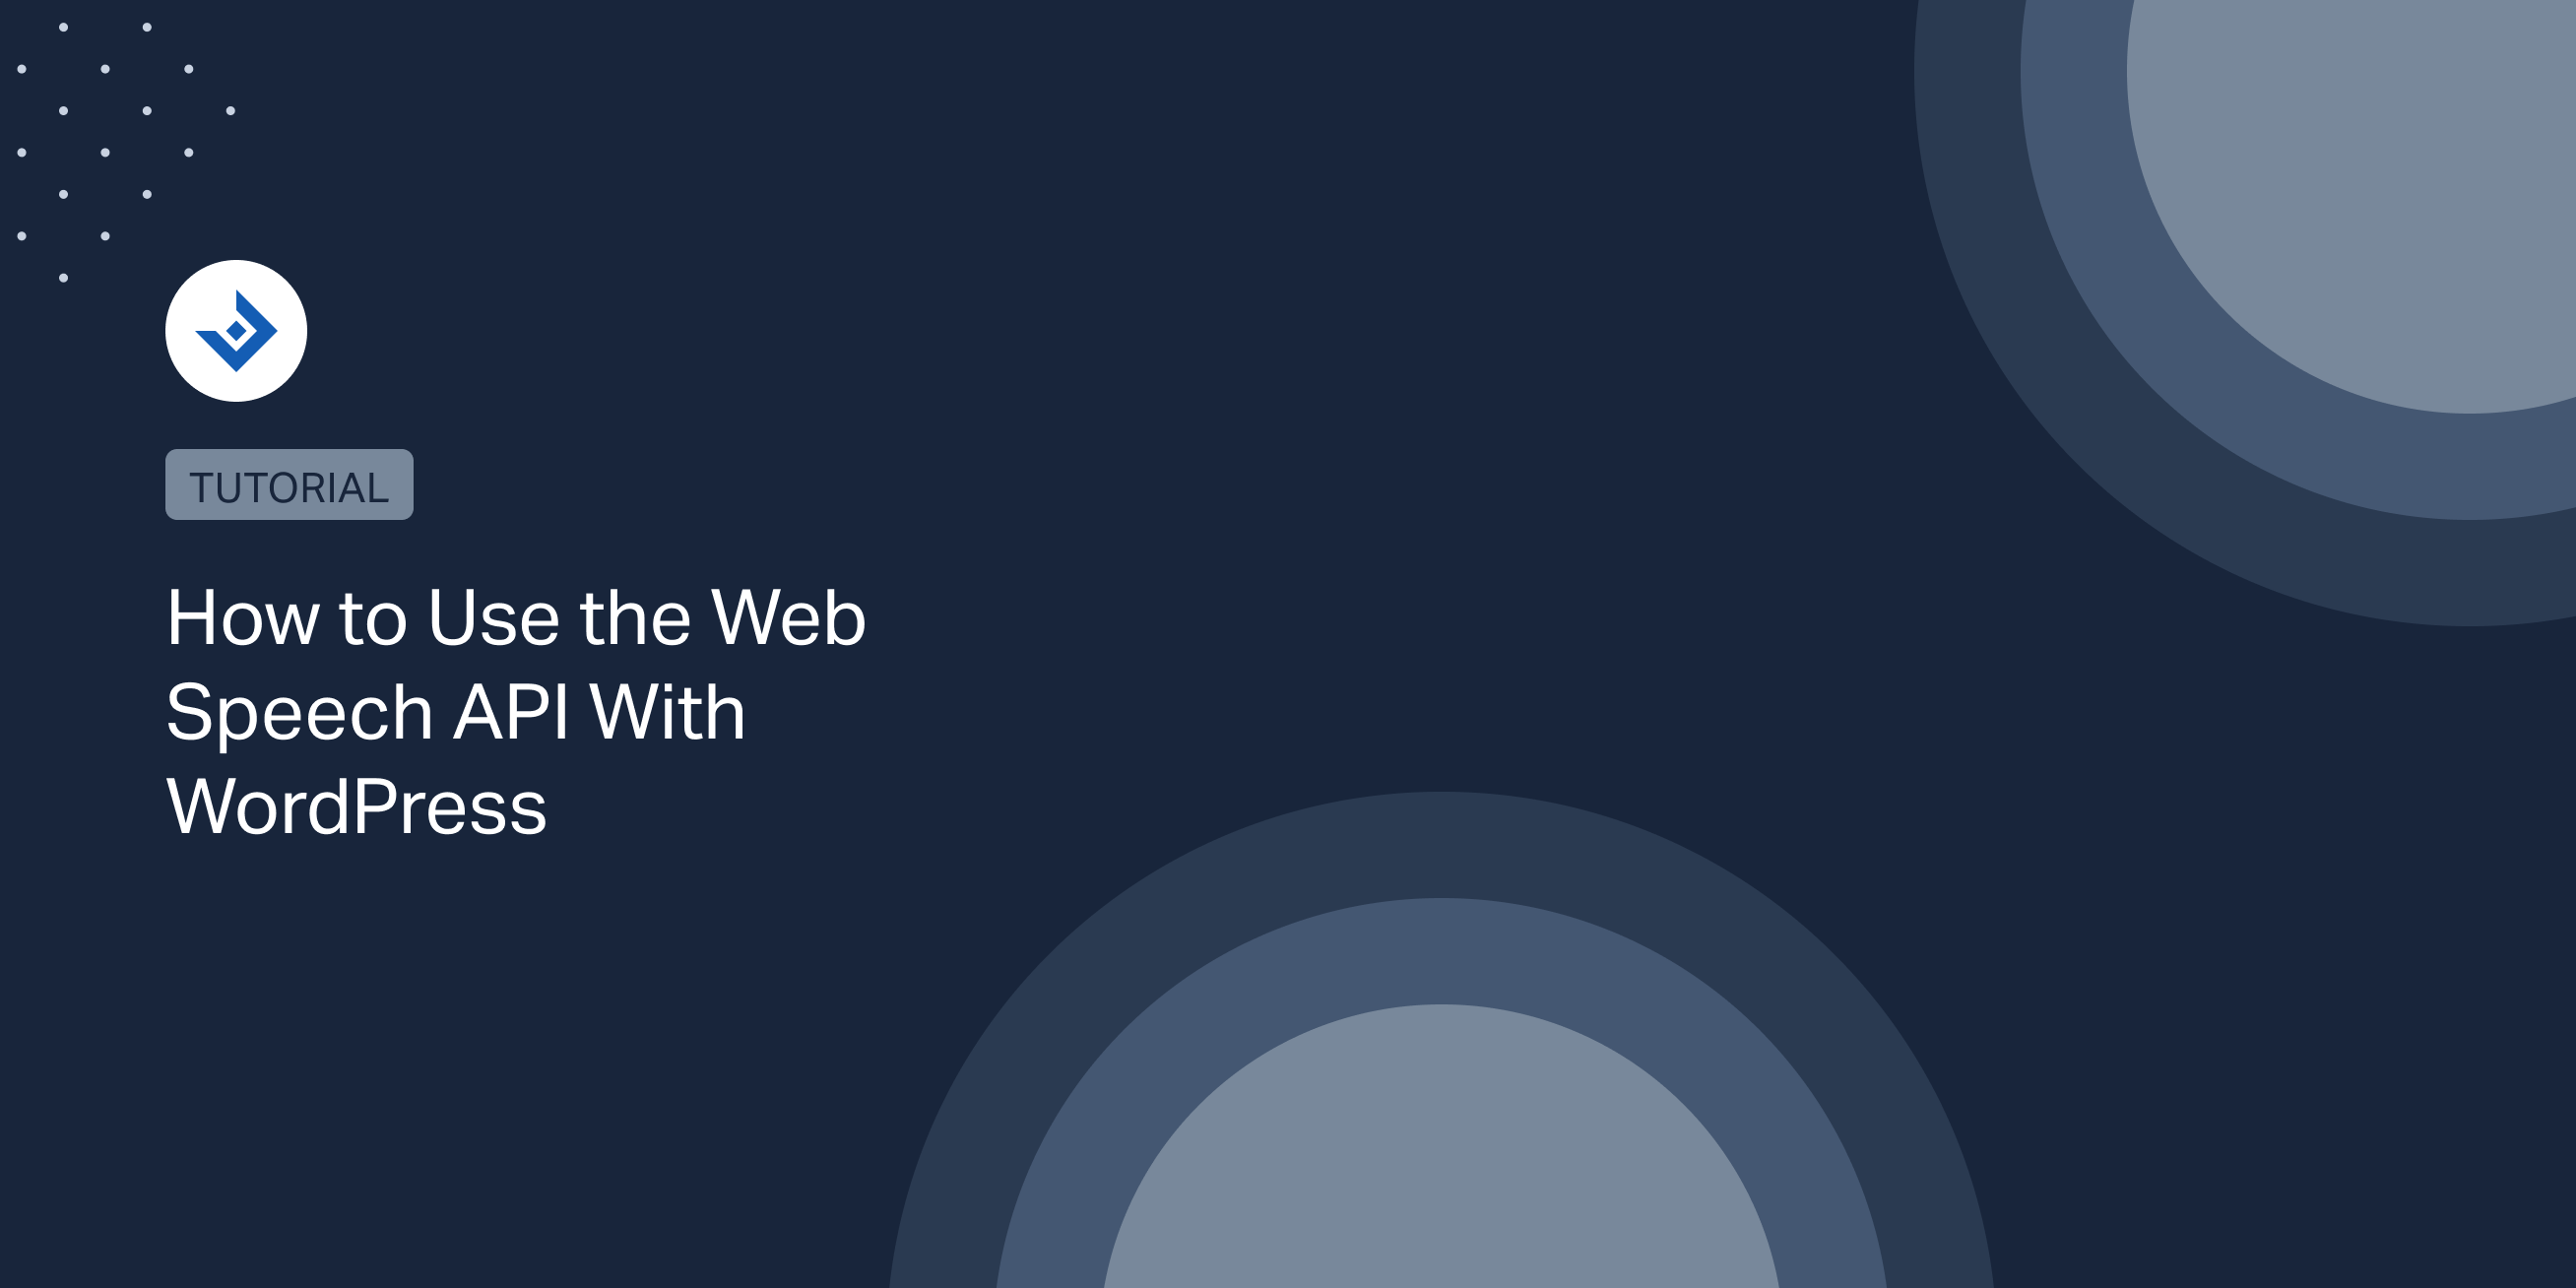 How to Use the Web Speech API With WordPress